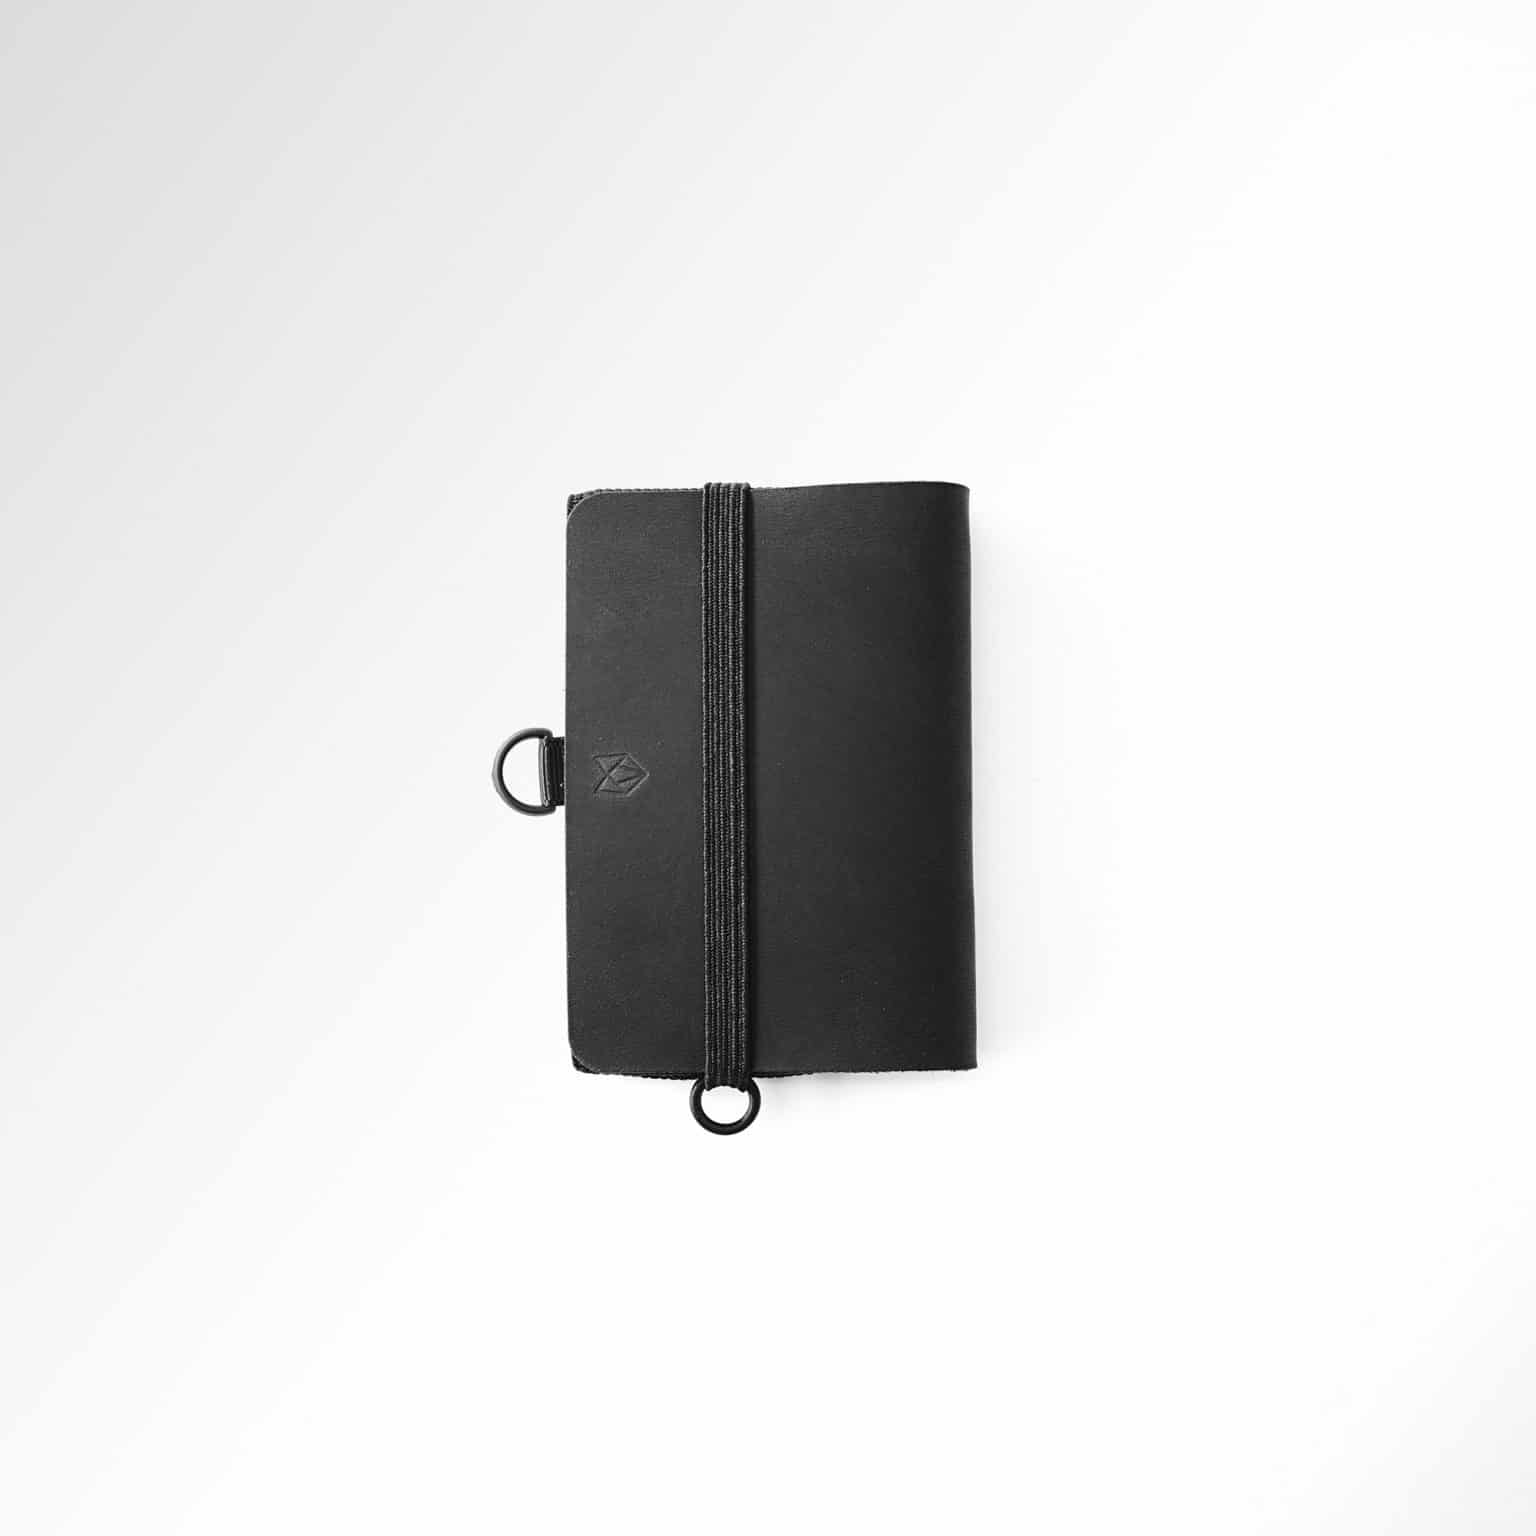 Compact slim wallet for front or back pocket